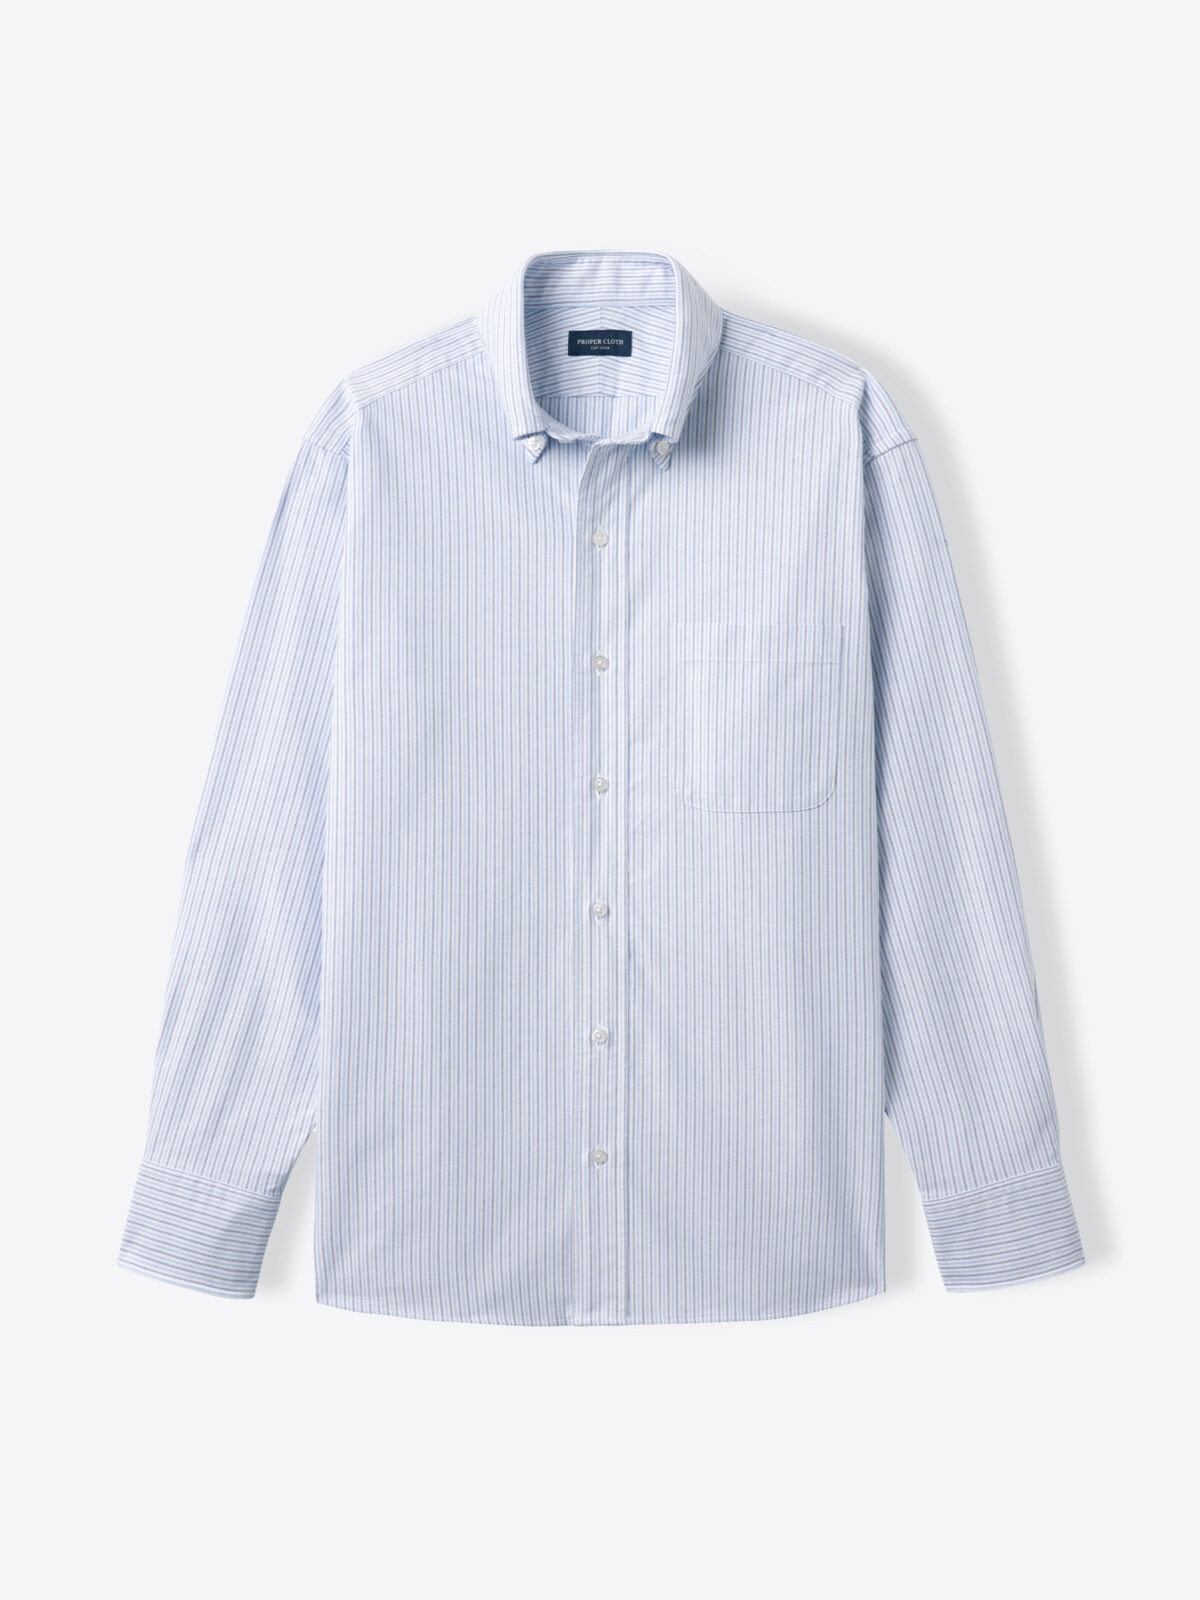 Blue Multi Stripe Oxford Cloth Shirt by Proper Cloth